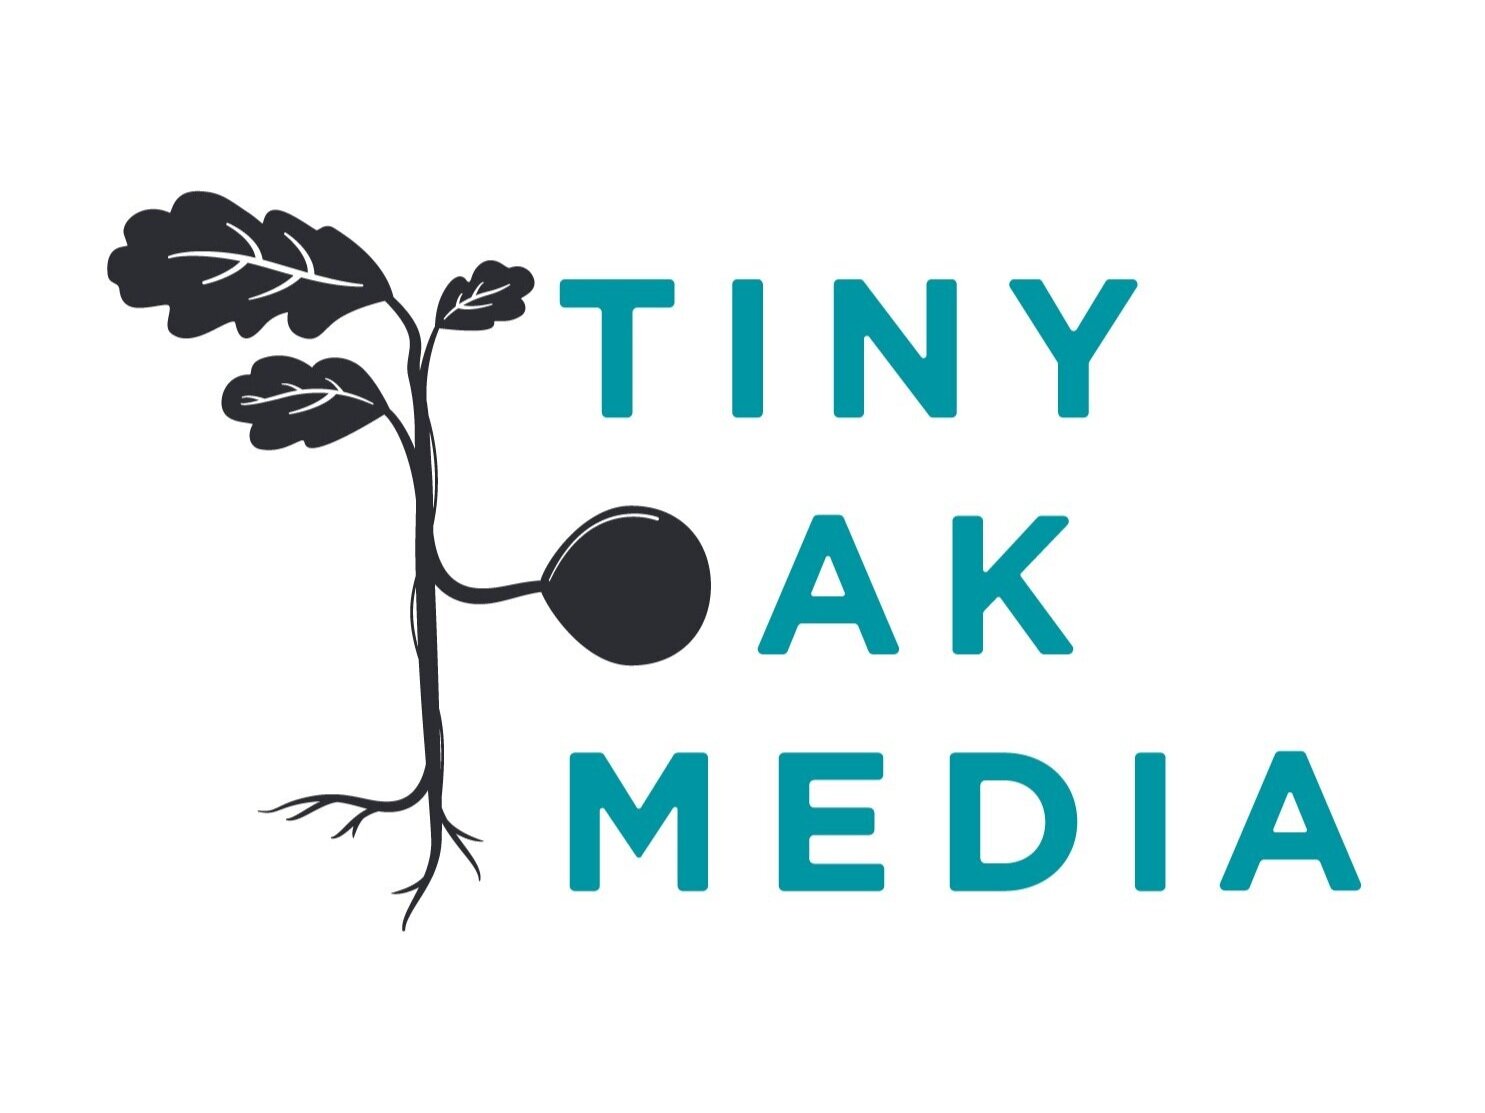 TINY OAK MEDIA